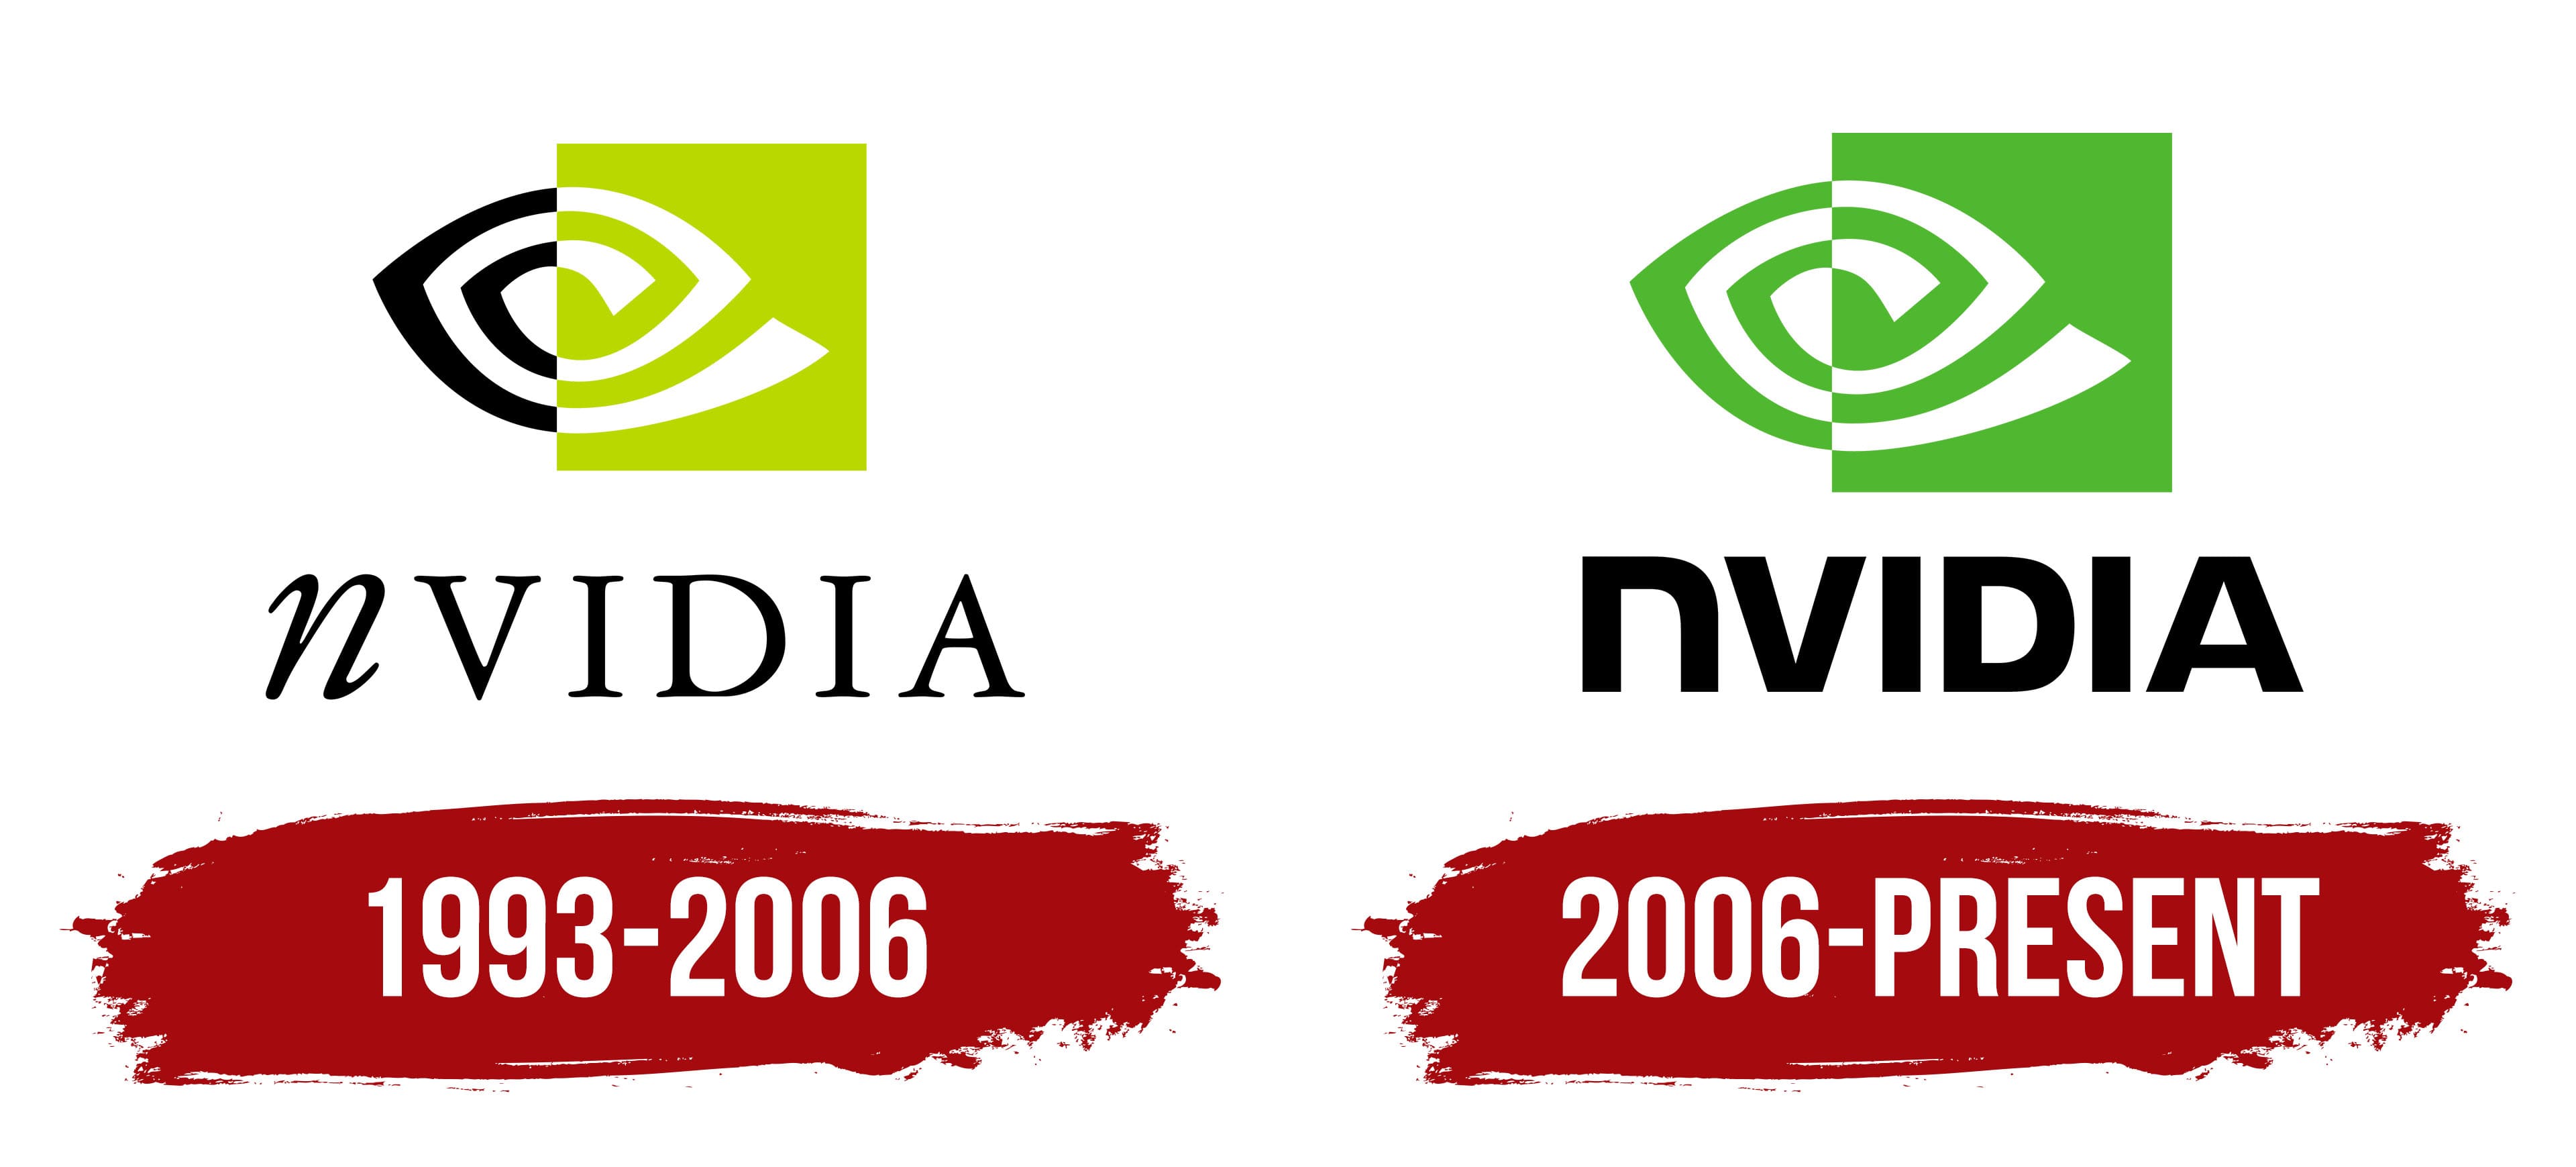 NVIDIA Company History: Innovations Over The Years NVIDIA | vlr.eng.br